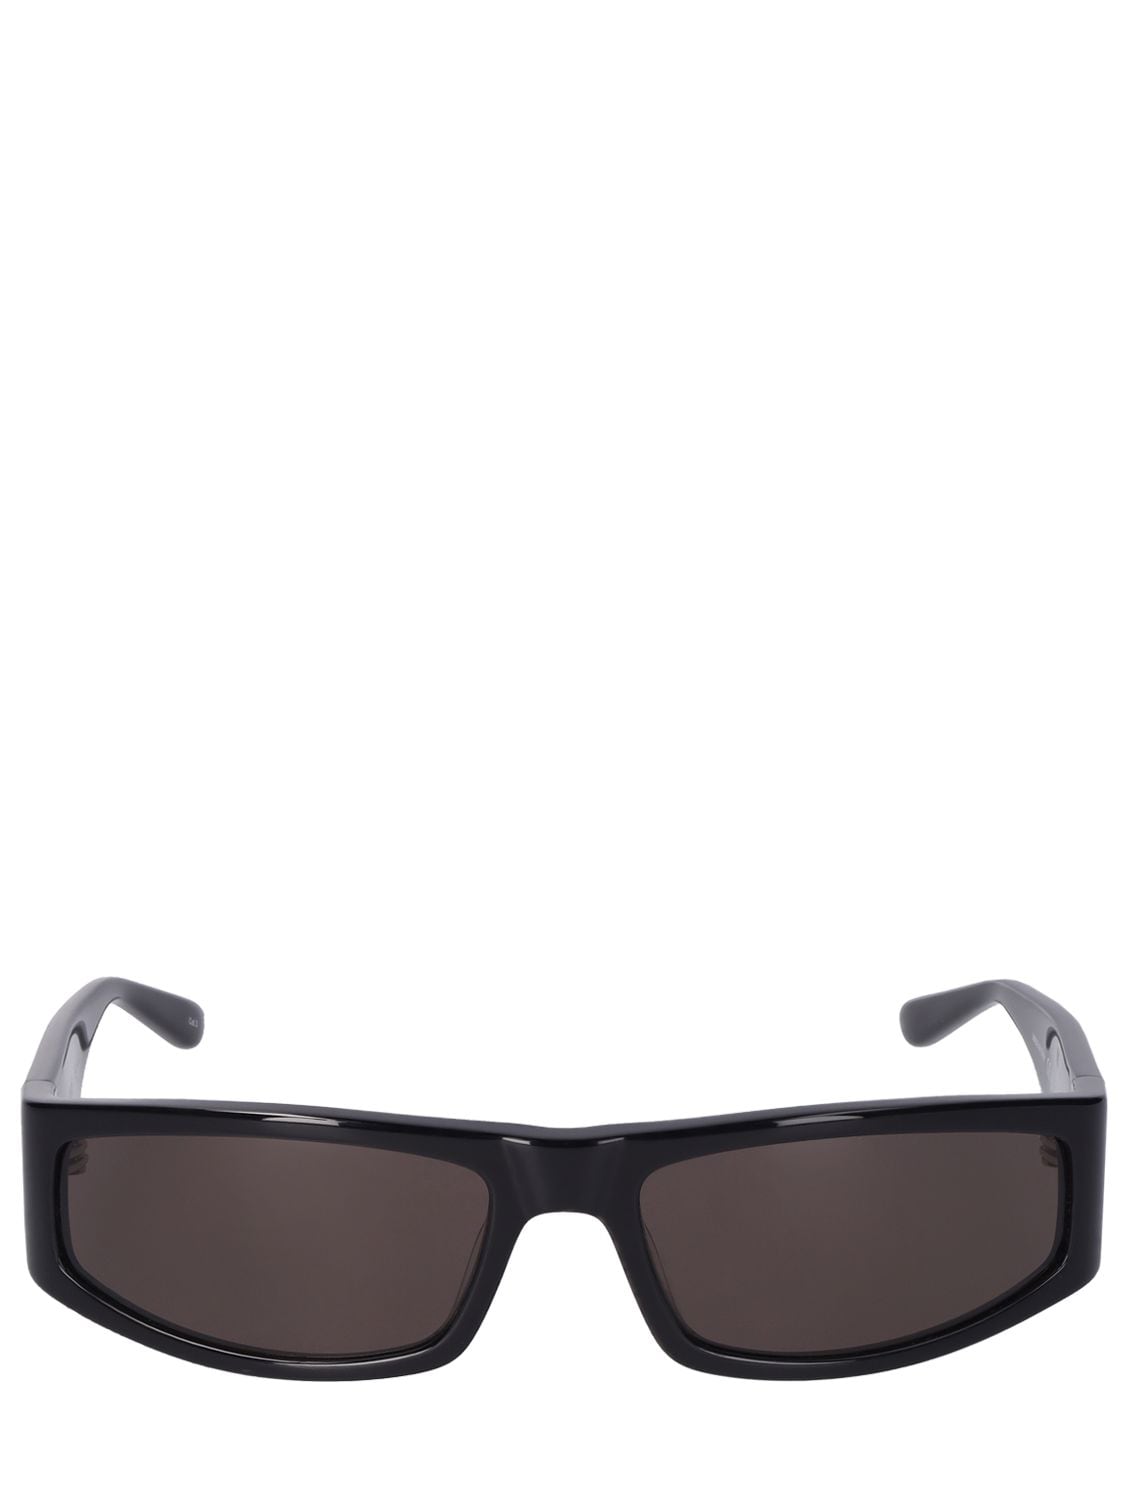 Image of Techno Squared Acetate Sunglasses